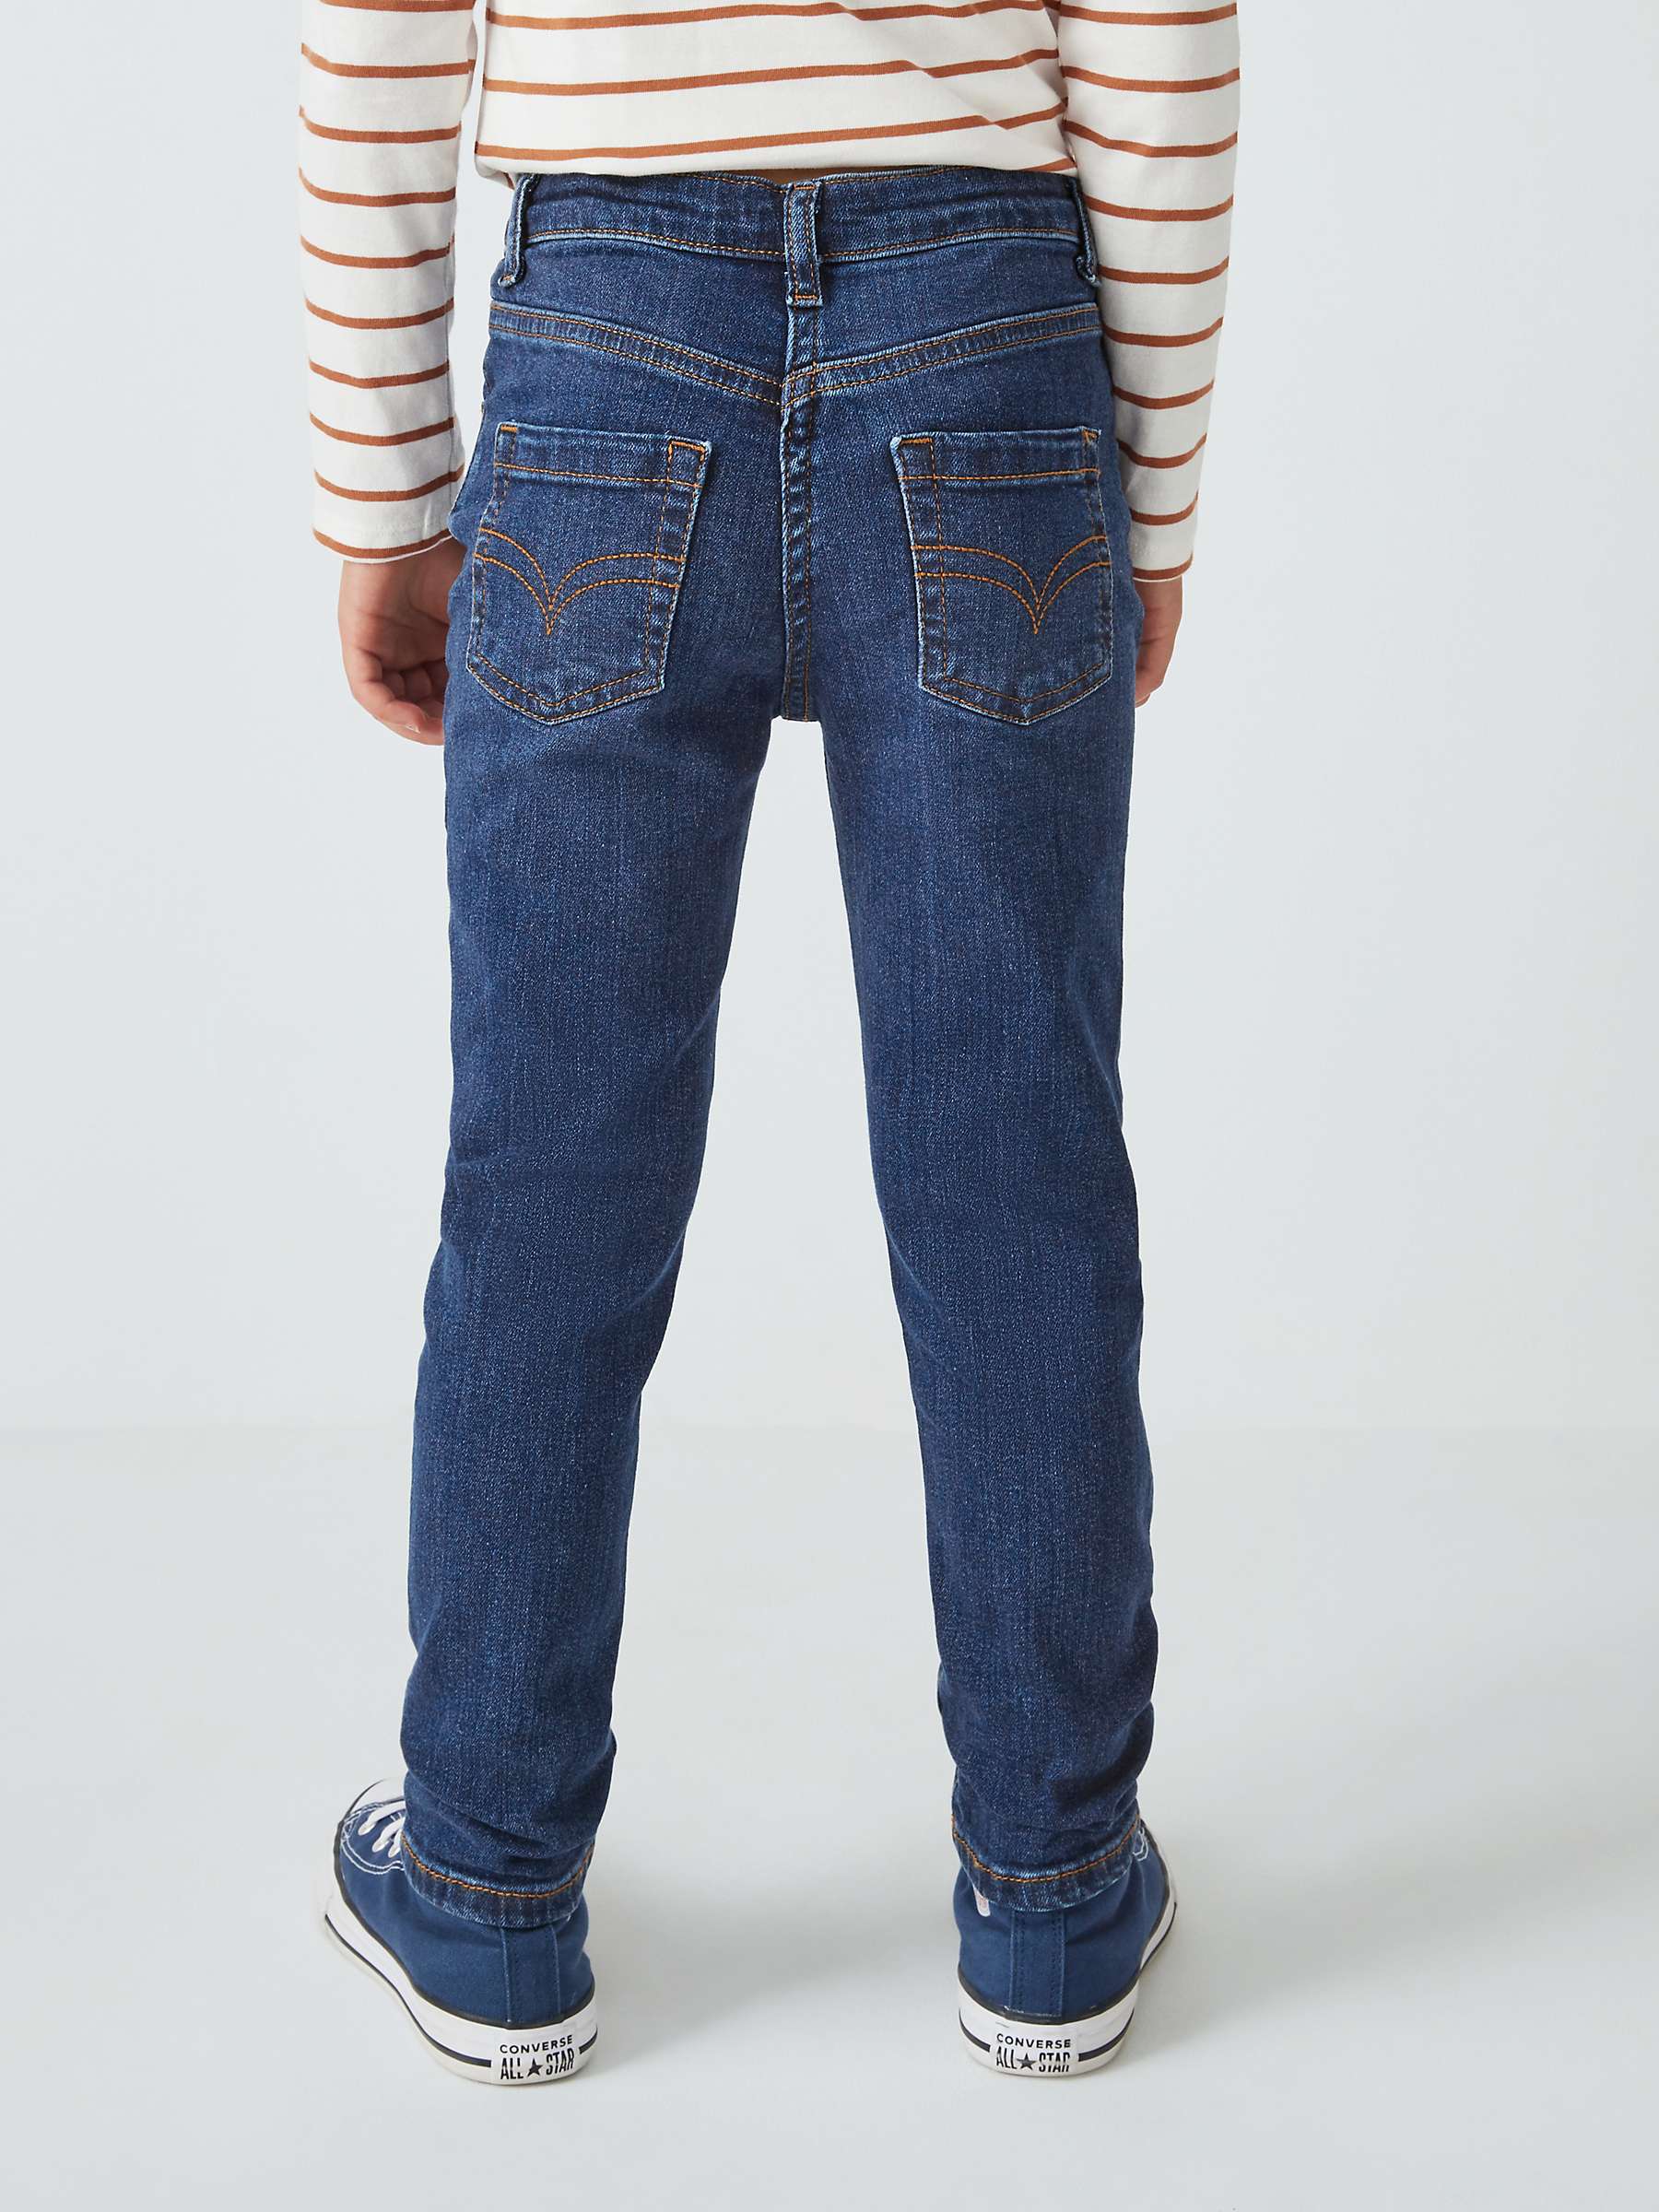 Buy John Lewis Girl's Skinny Jeans, Mid Wash Denim Online at johnlewis.com